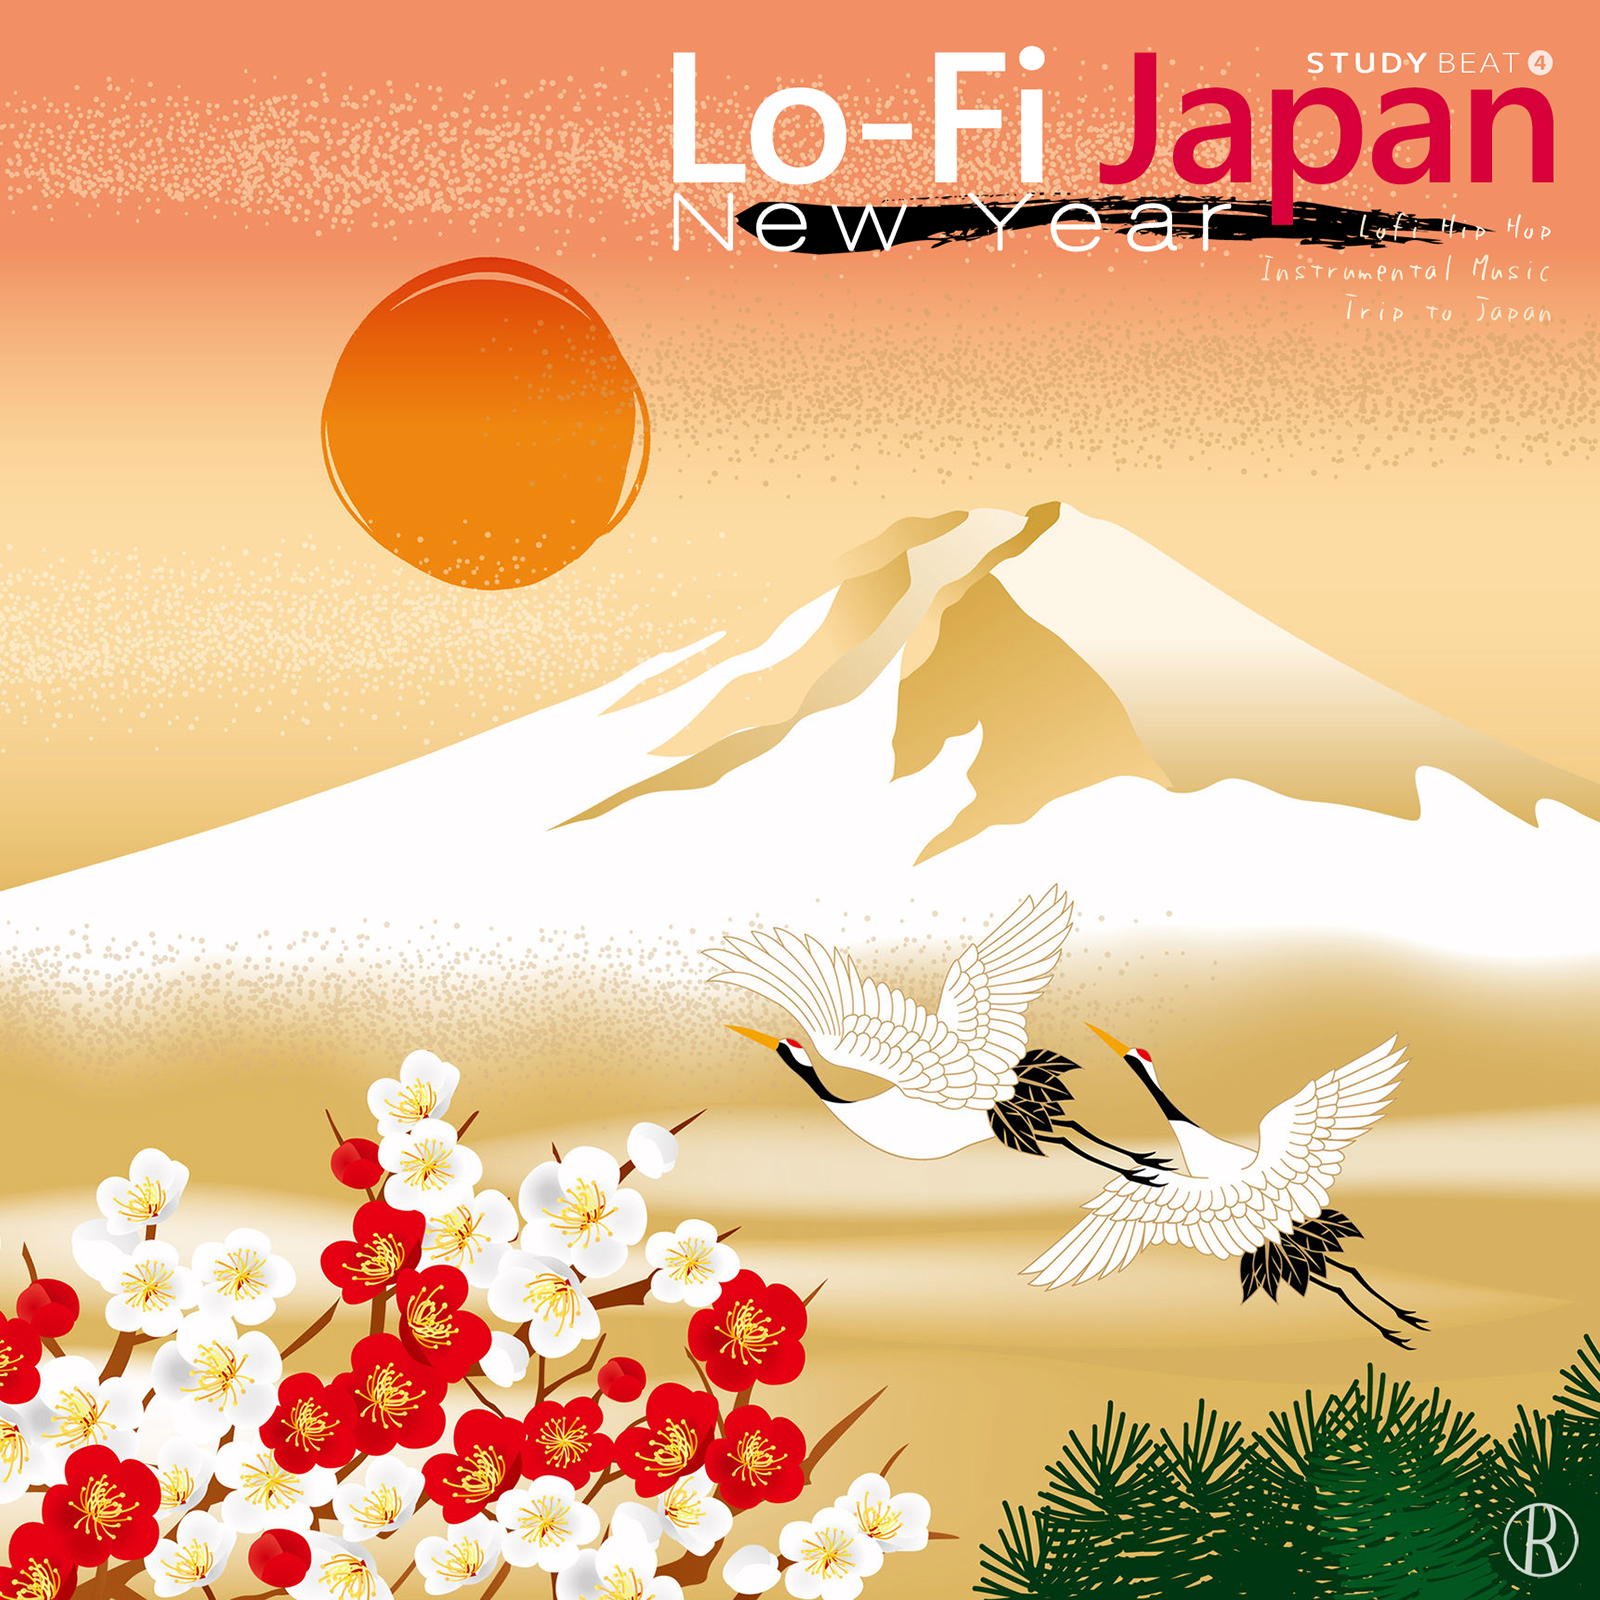 Lo-Fi Japan - Lo-Fi New Year (Lofi Hip Hop Instrumental Music Trip to Japan / お正月) - Study Beat 4